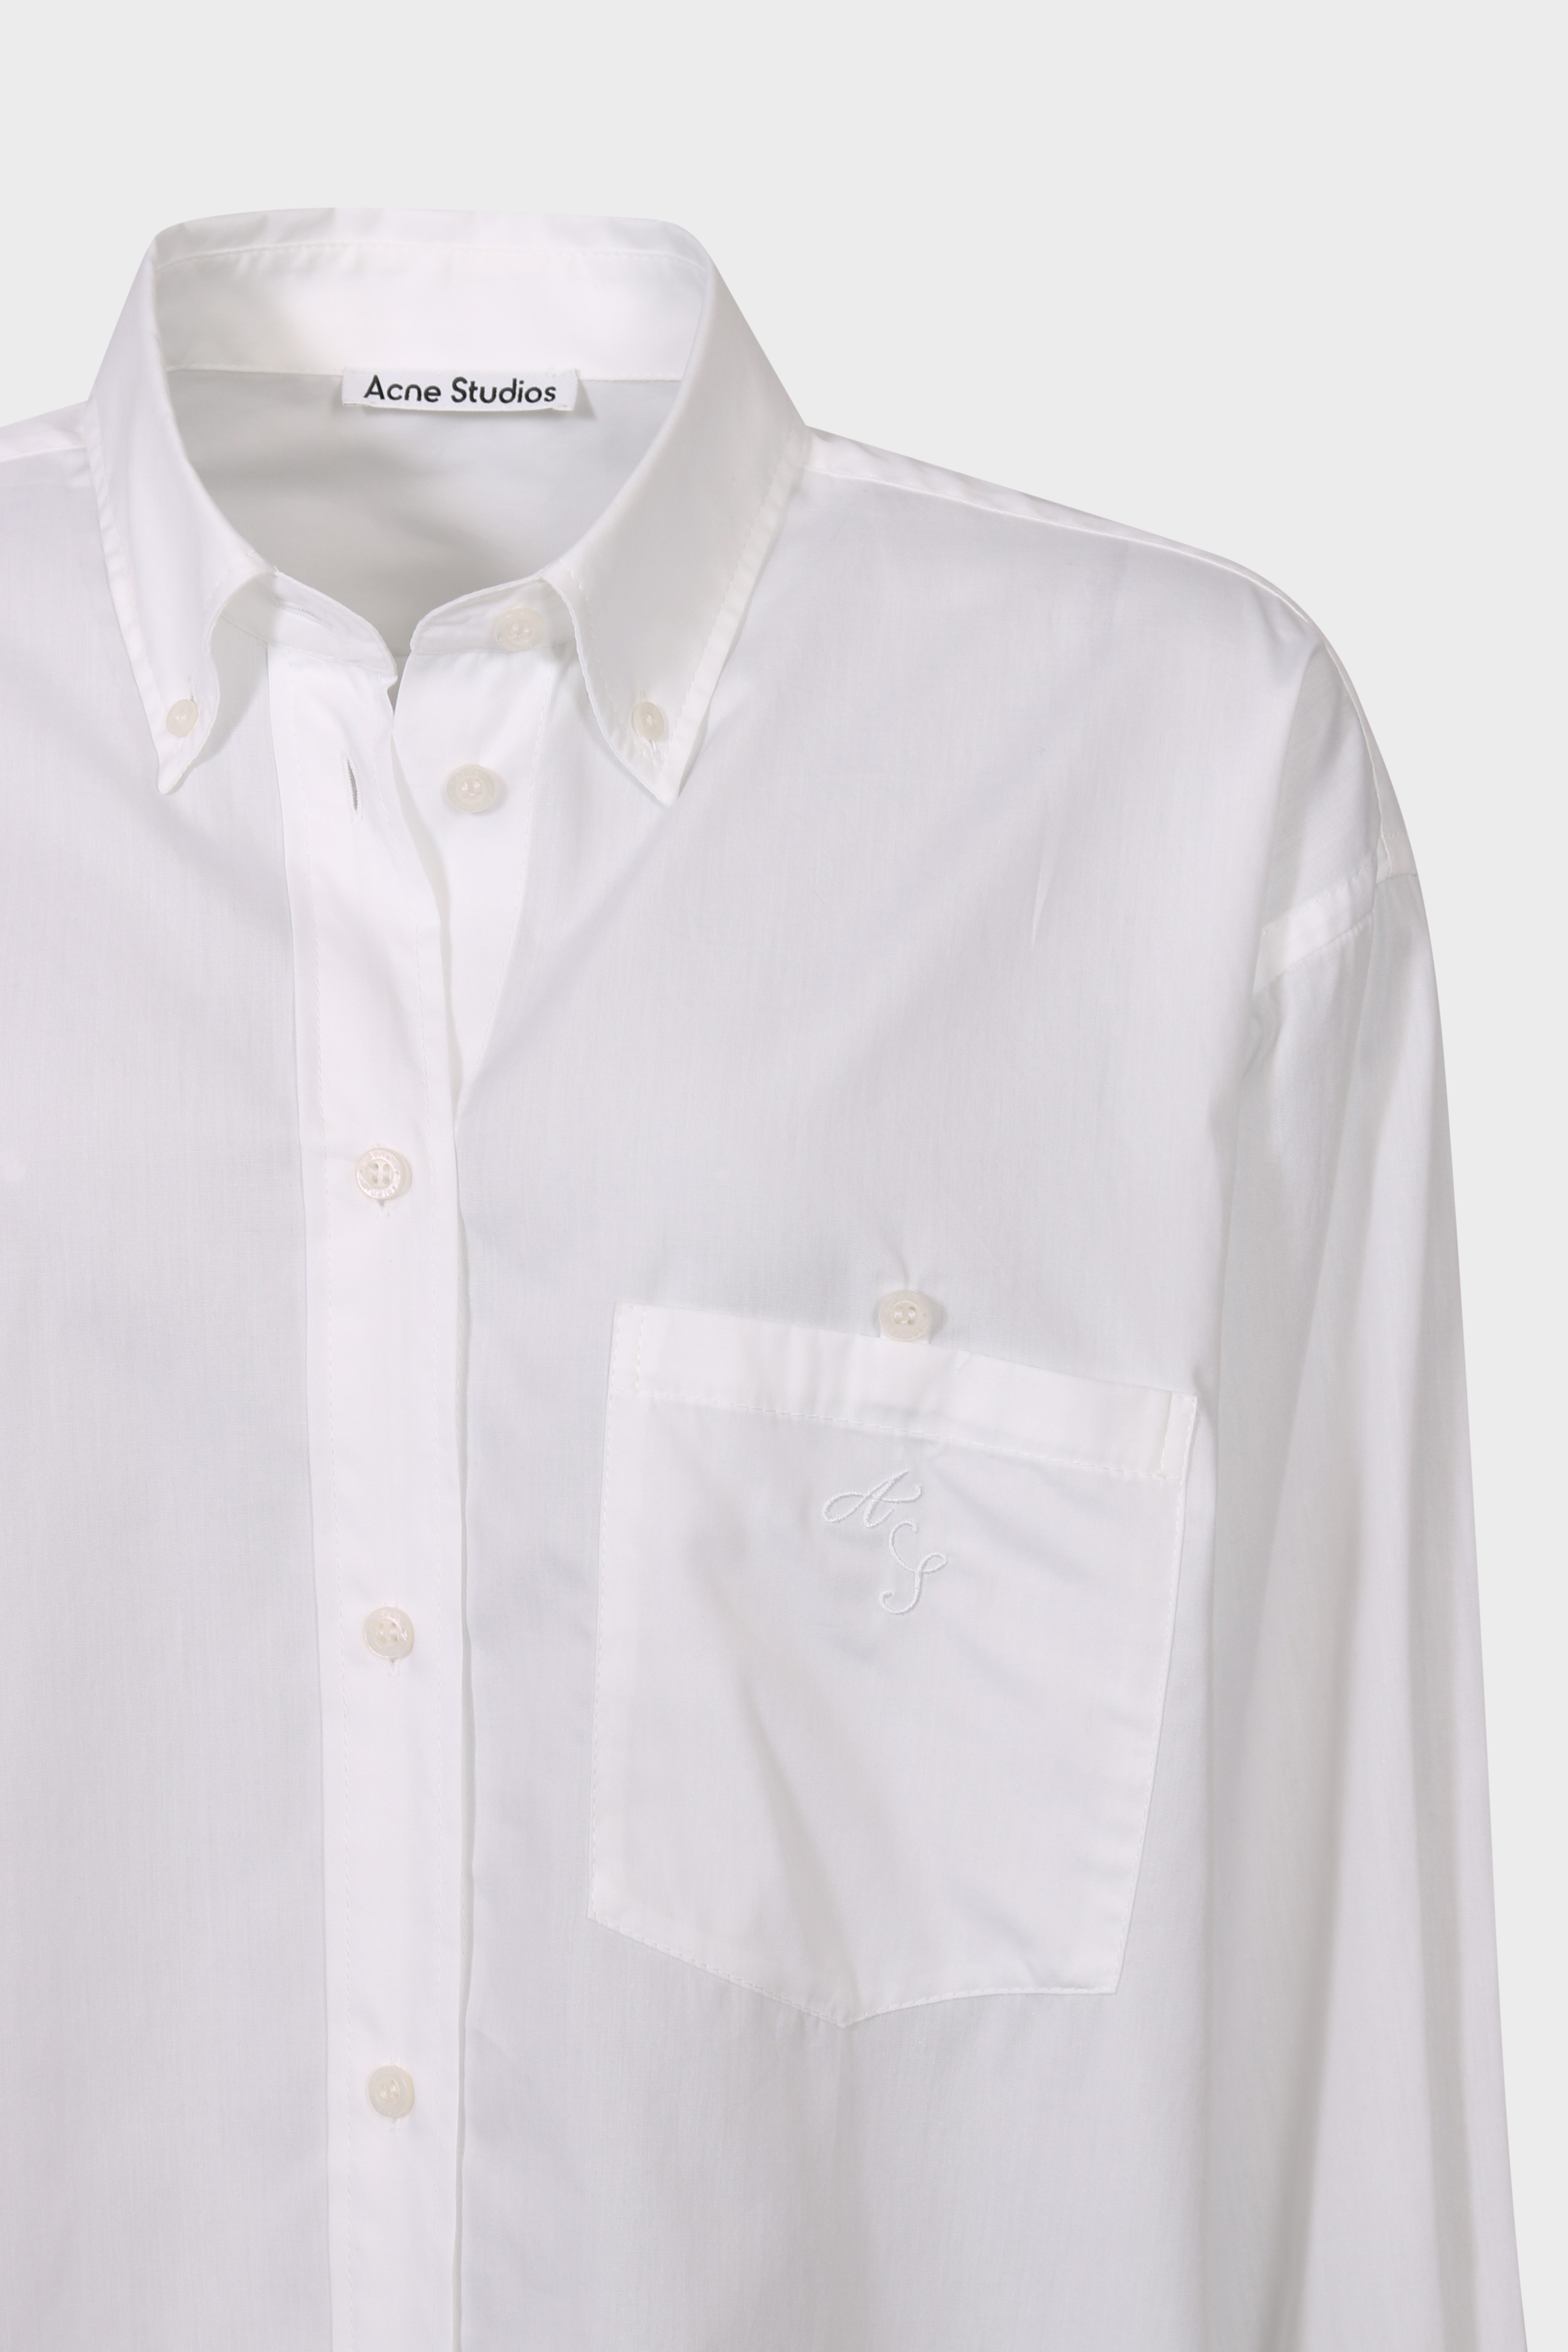 ACNE STUDIOS Oversize Shirt in White 32